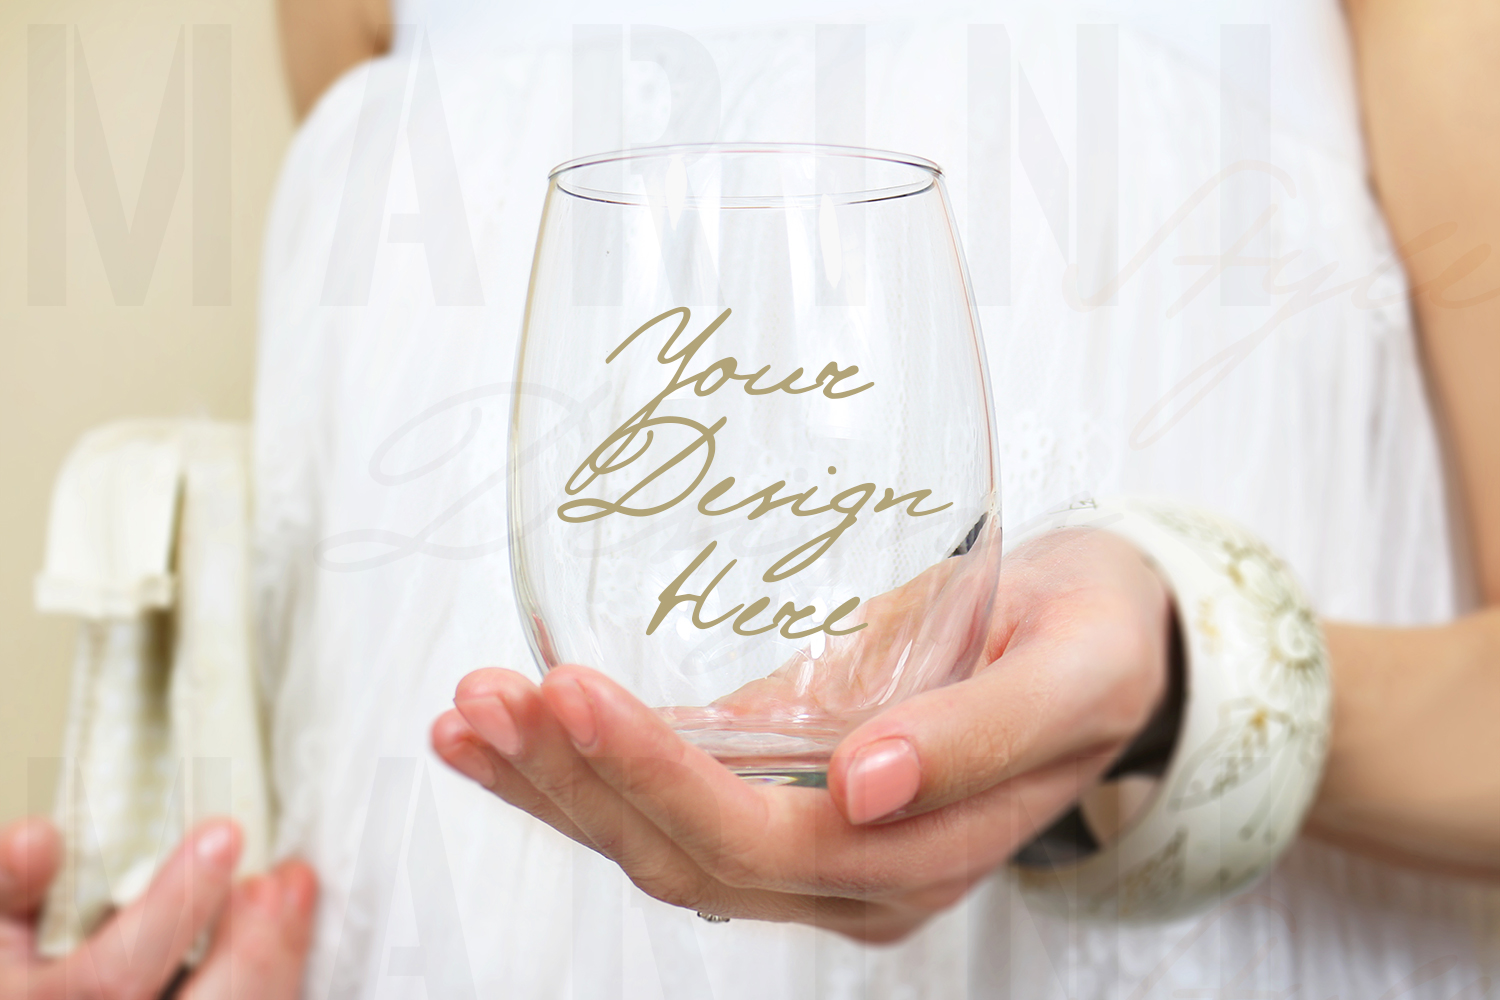 Download Stemless Wine glass mockup, wine glass Stock Photo 903